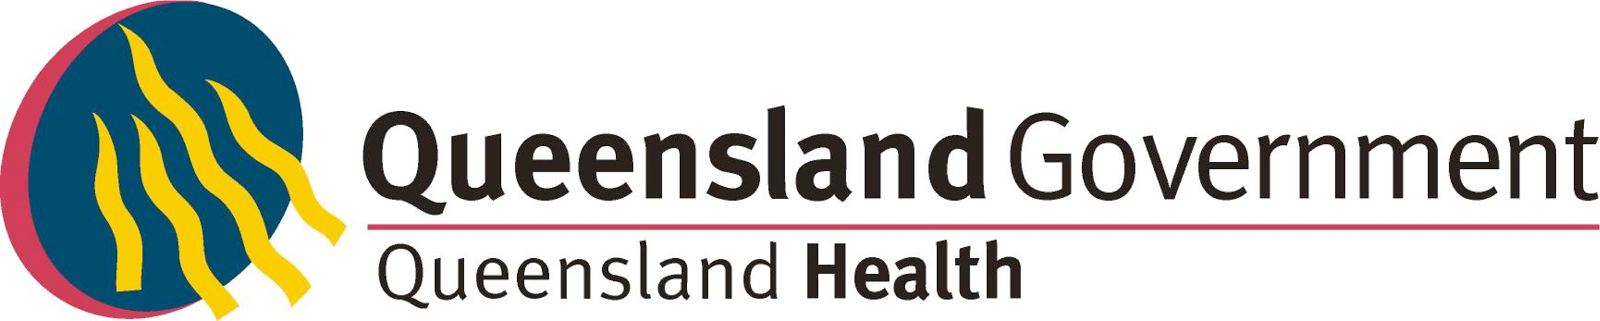 Queensland Health New Payroll System Fiasco